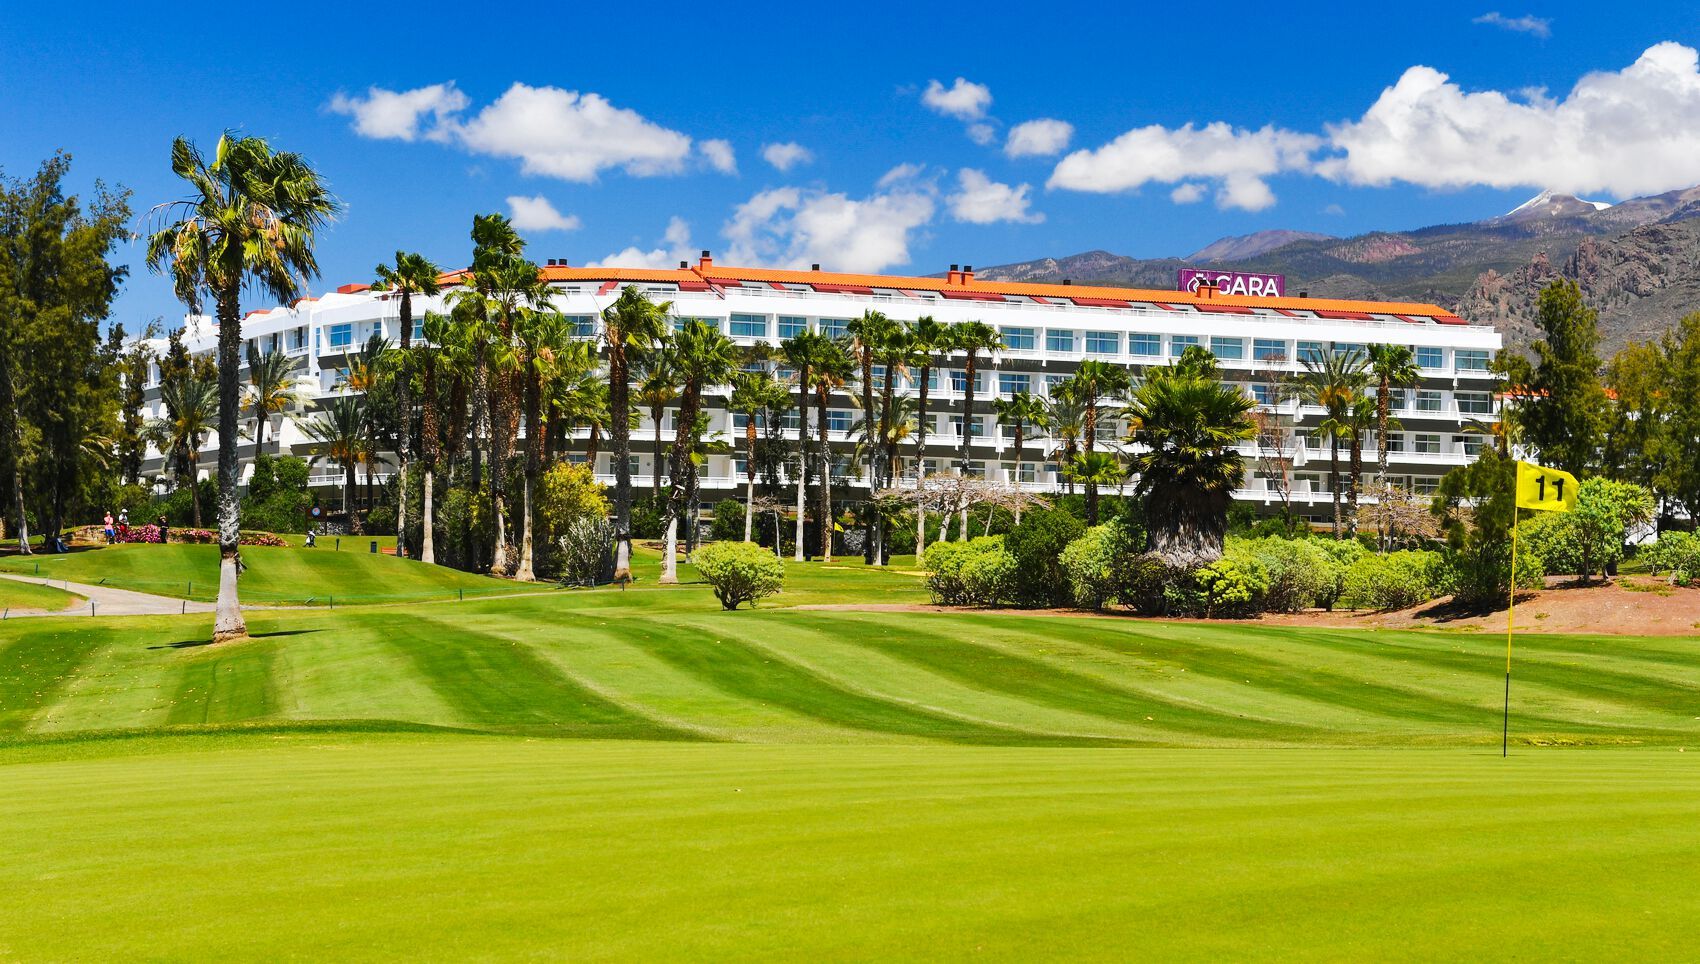 Canaries - Tenerife - Espagne - Hotel Gara Suites Golf and Spa 4*